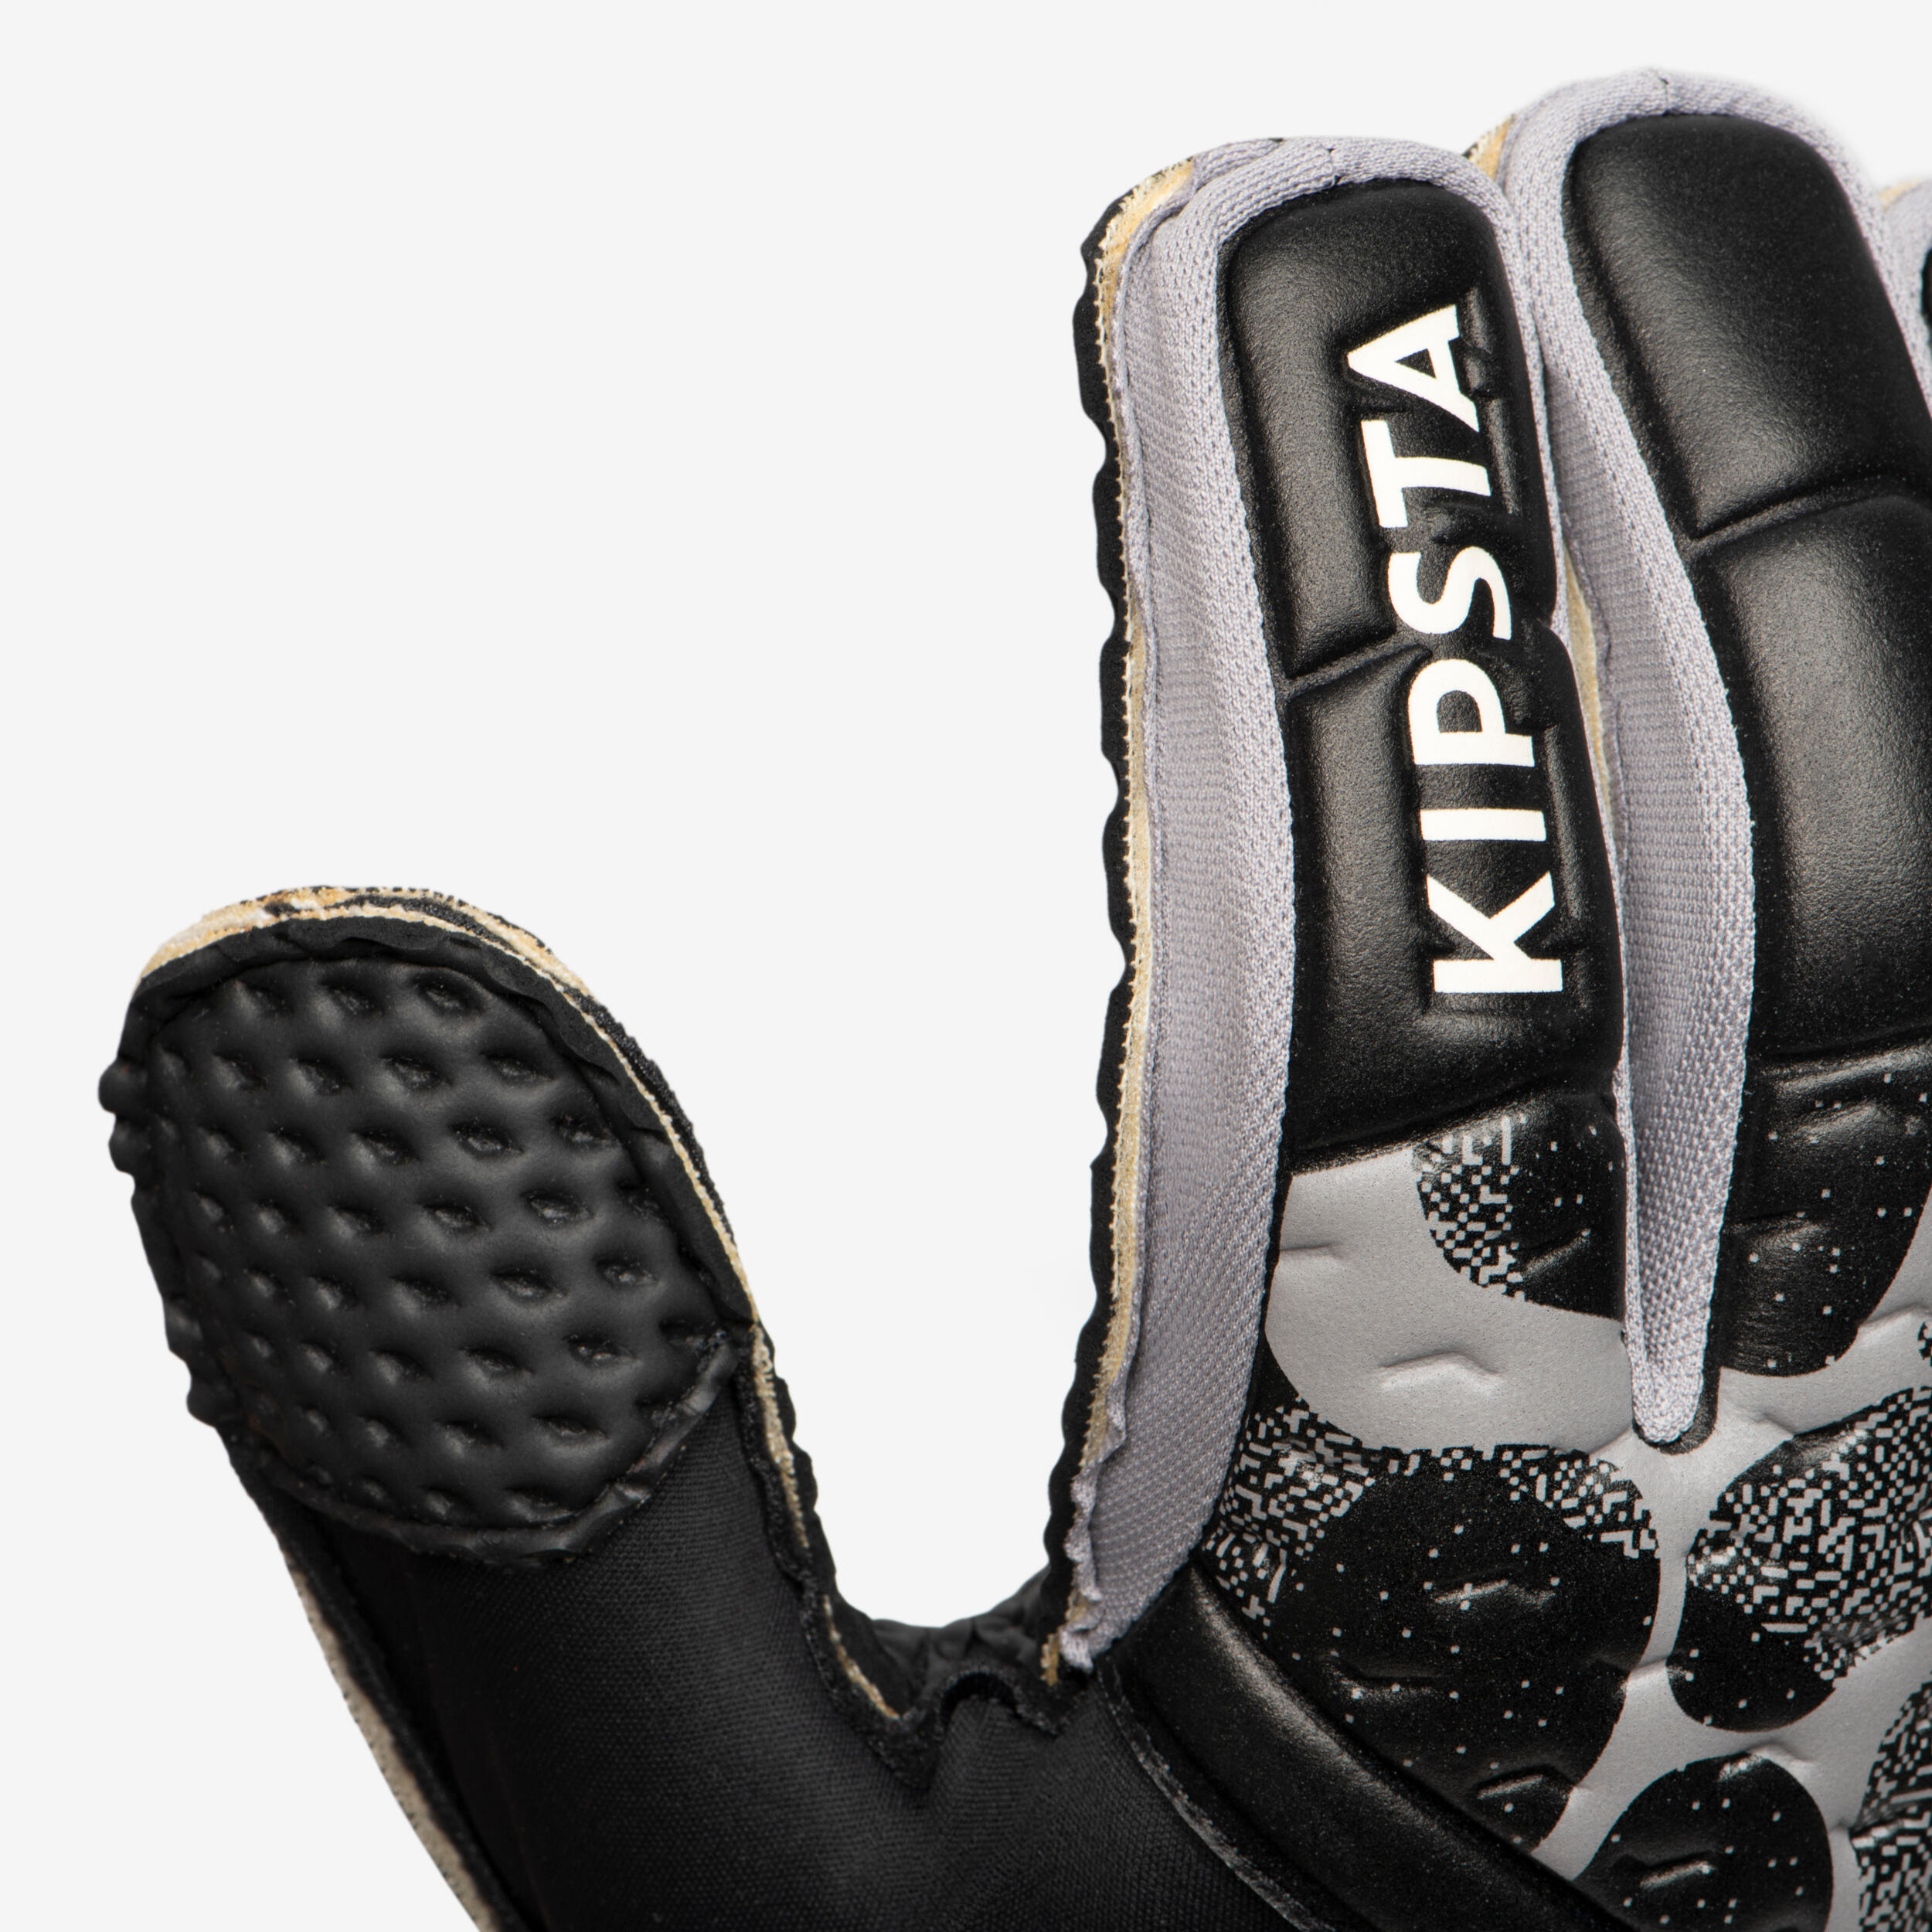 Adult Football Goalkeeper Gloves F100 Superresist - Black/Grey 6/7